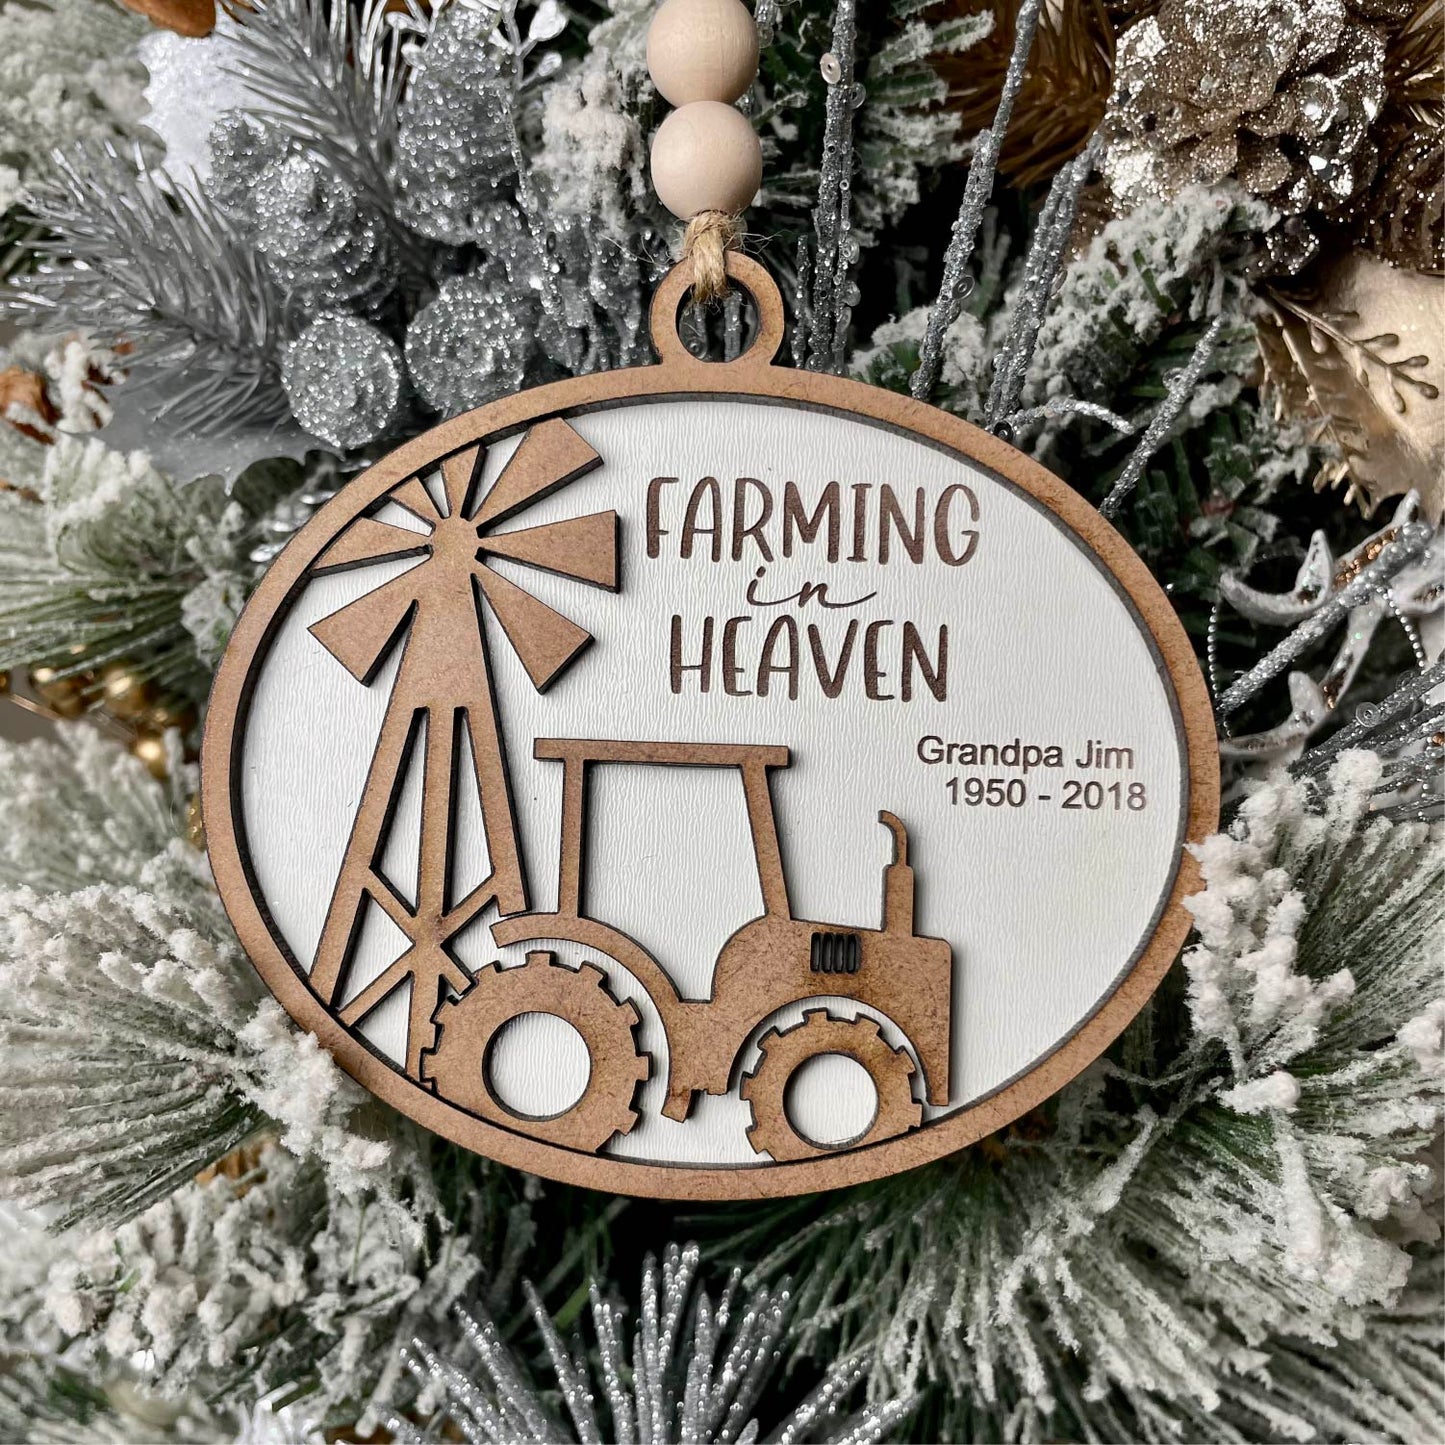 Farming Memorial Ornament